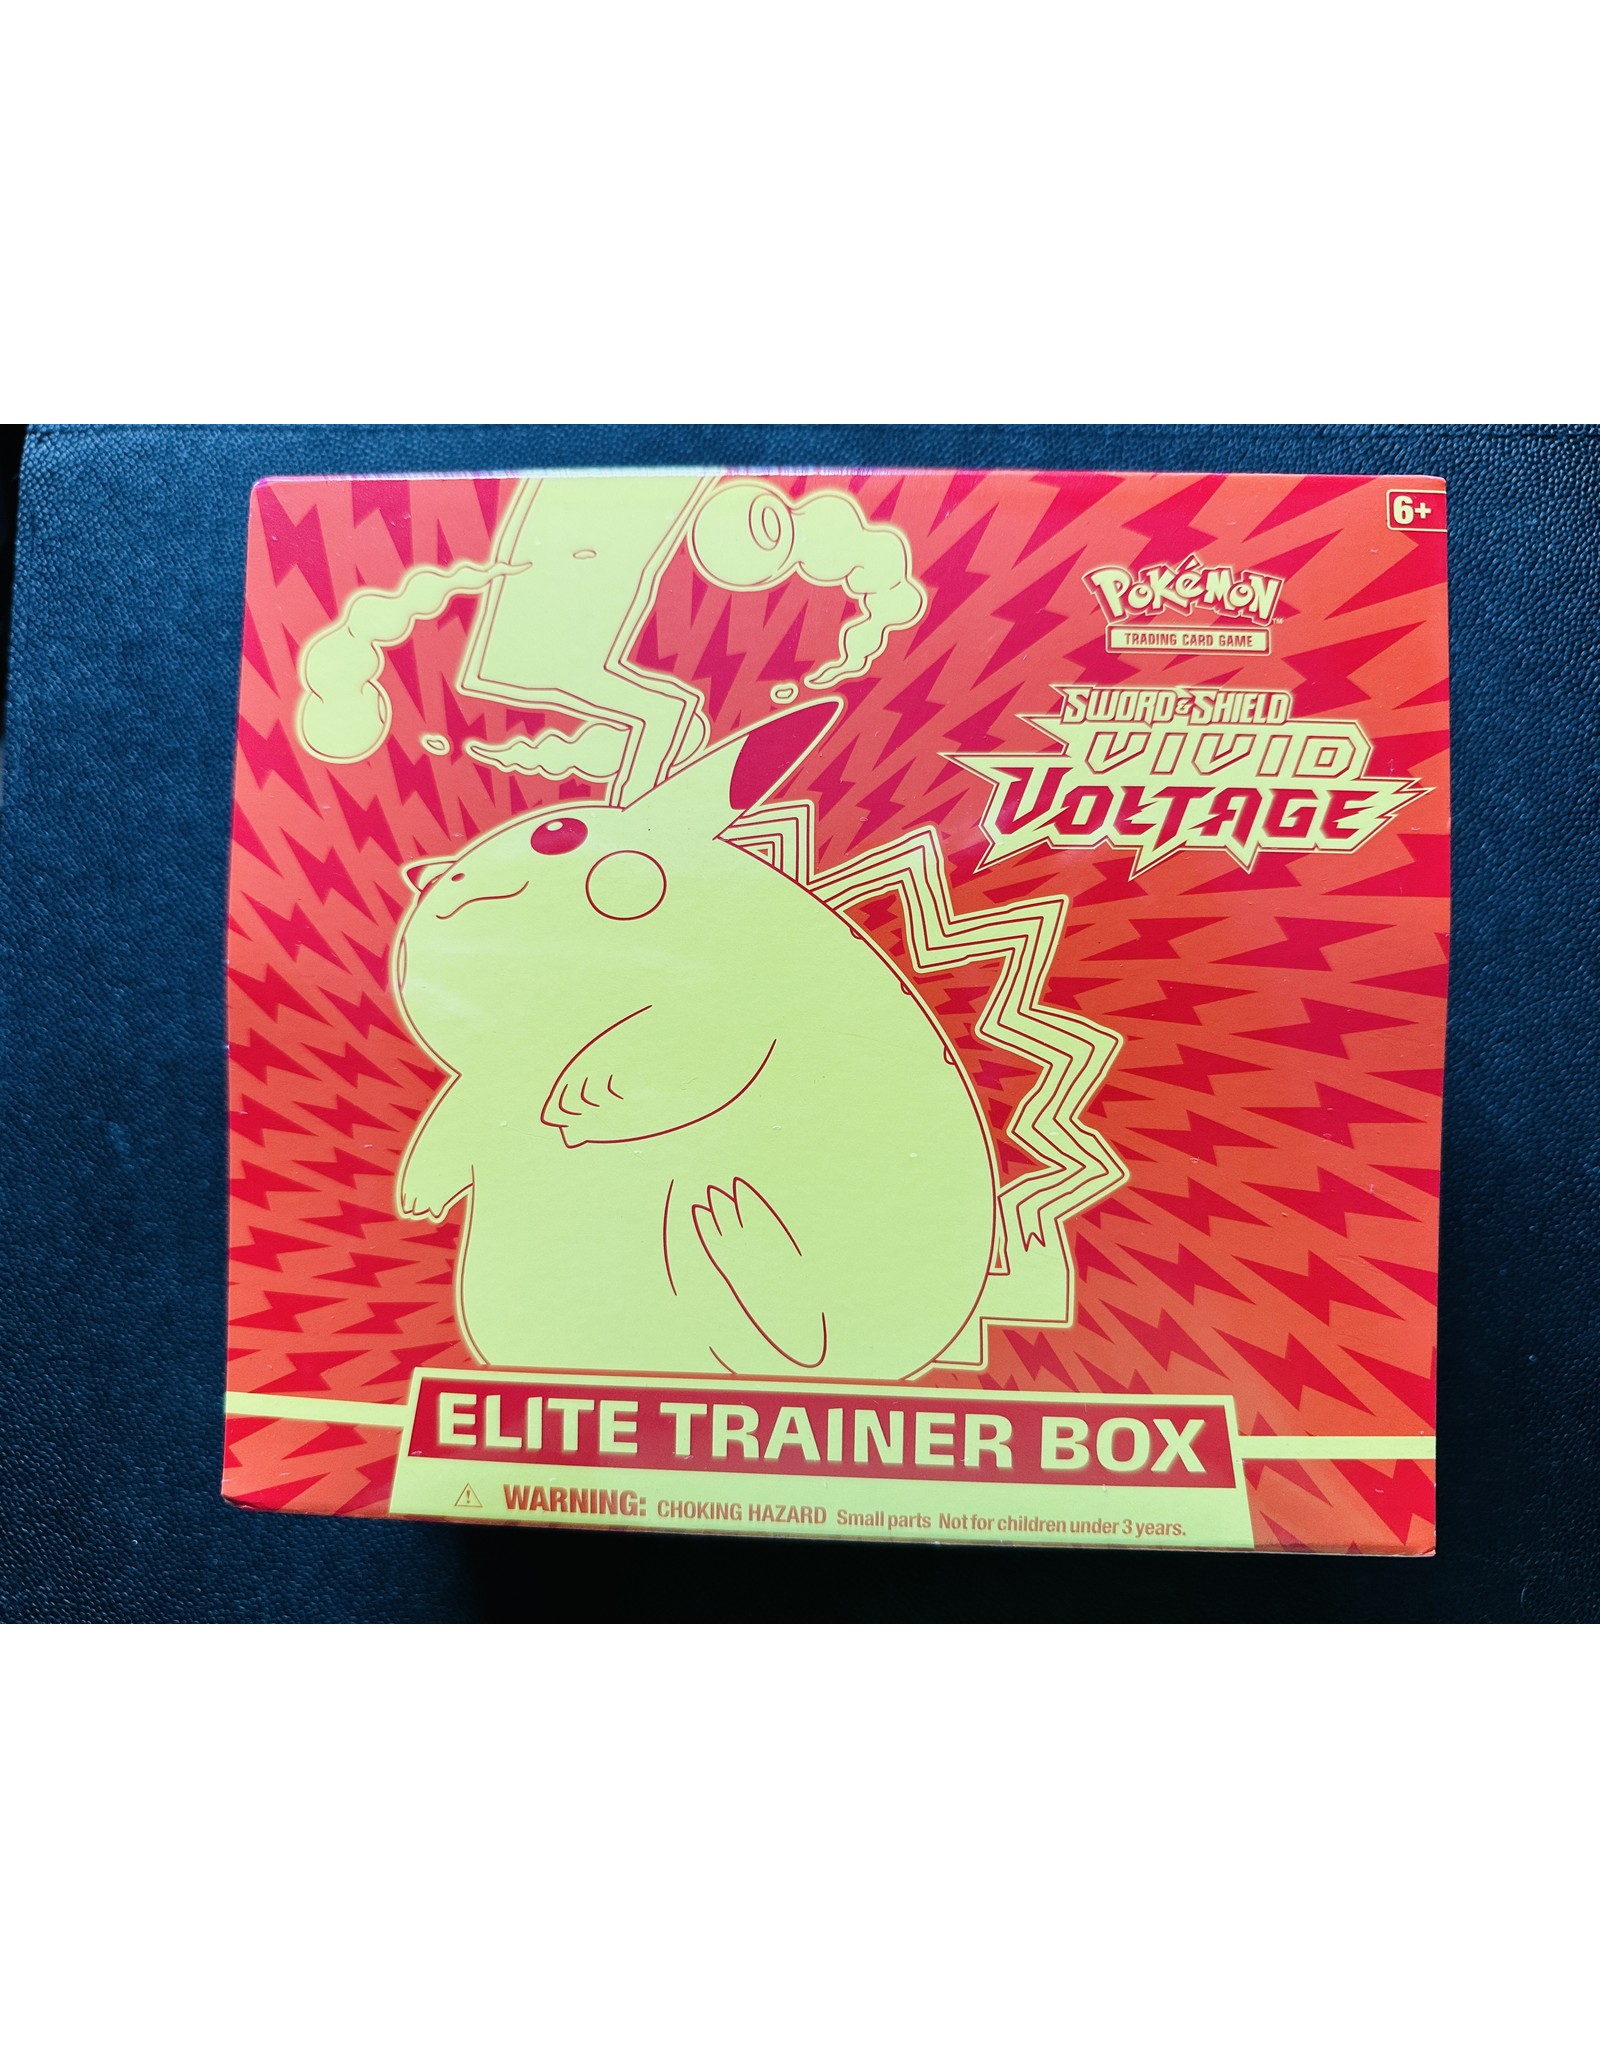 DAMAGED Vivid Voltage Elite Trainer Box